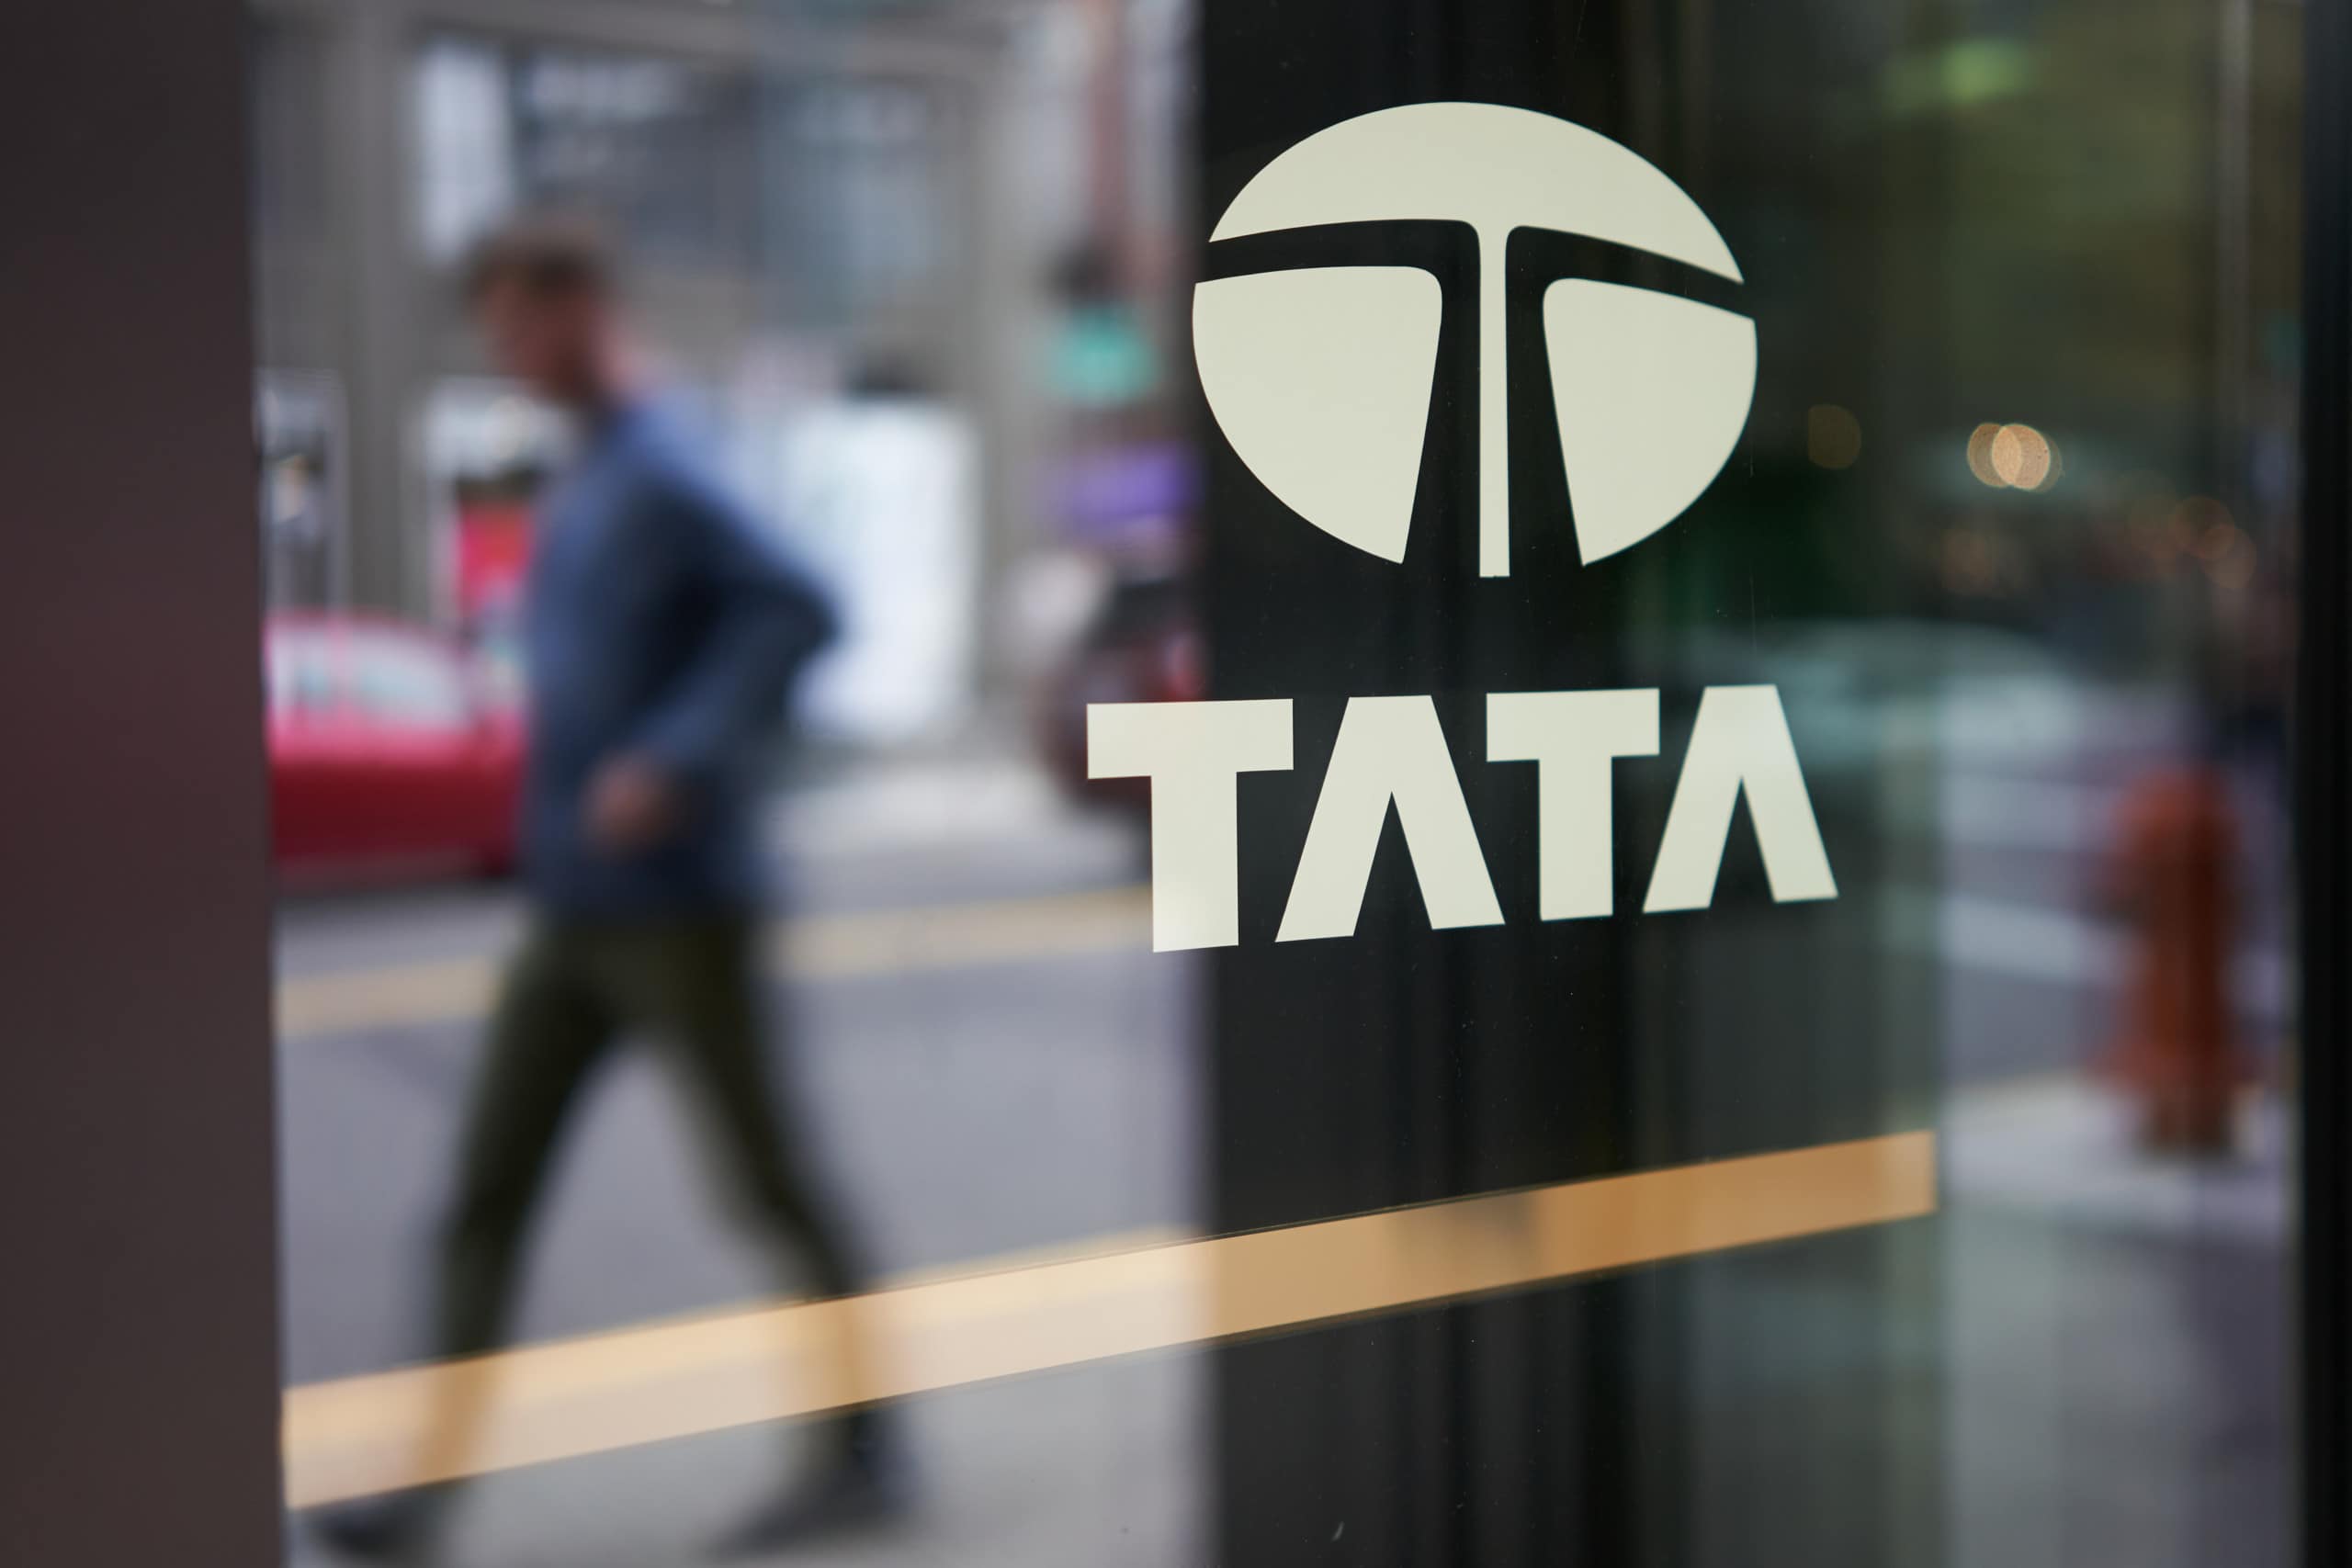 Tata Group companies surge on Tata Sons' IPO buzz - The Economic Times